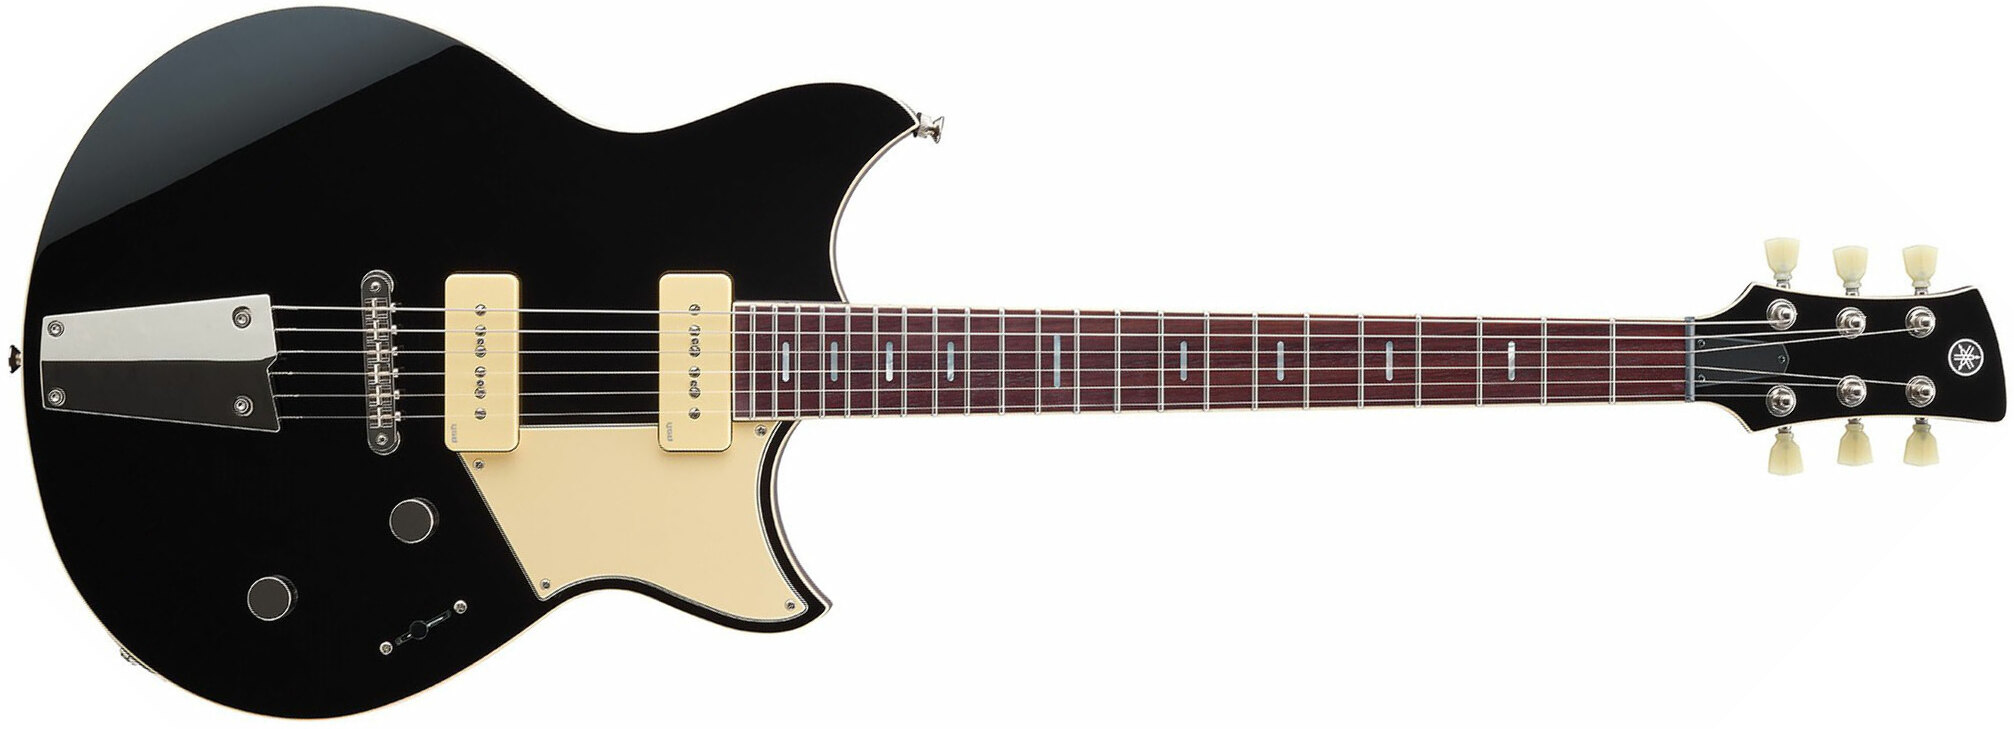 Yamaha Rss02t Revstar Standard 2p90 Ht Rw - Black - Double Cut E-Gitarre - Main picture